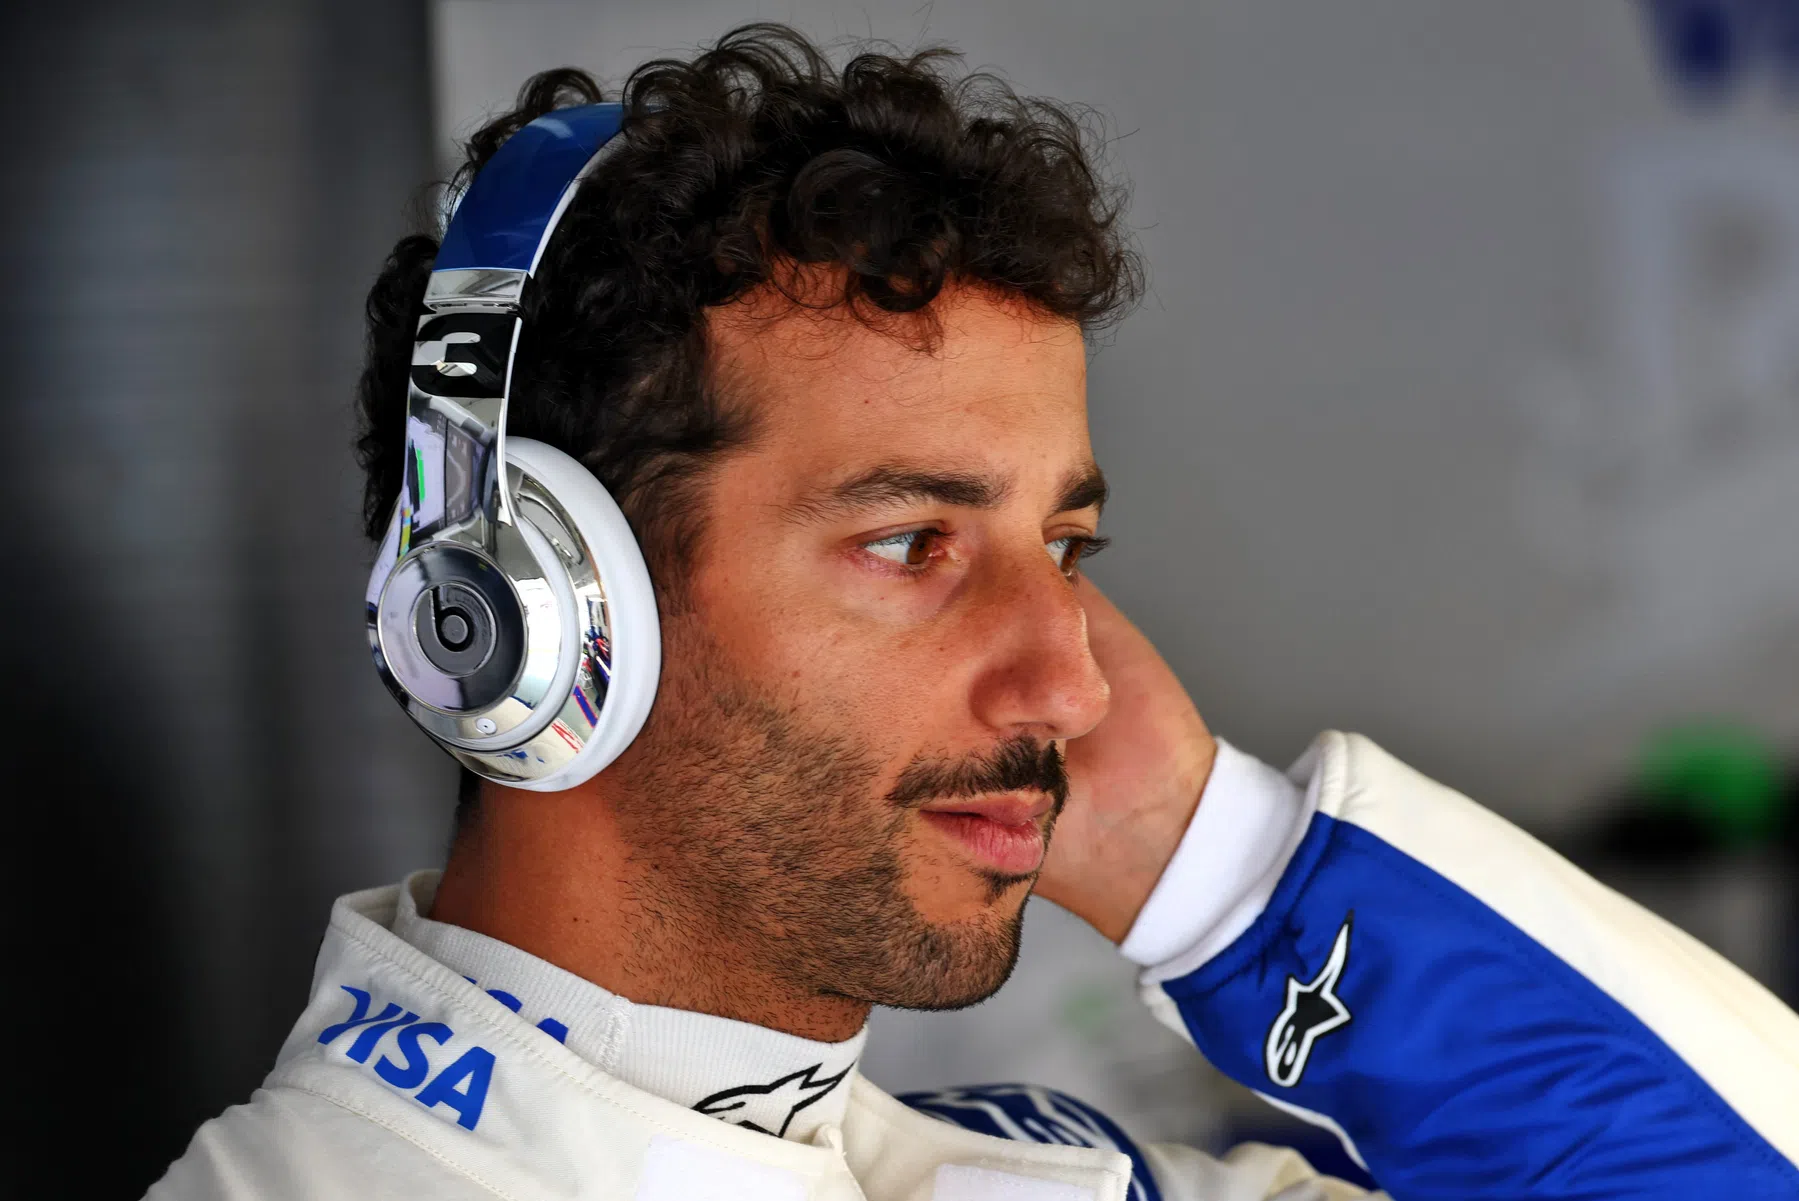 Ricciardo beschimpft Stroll nach Kollision beim China GP